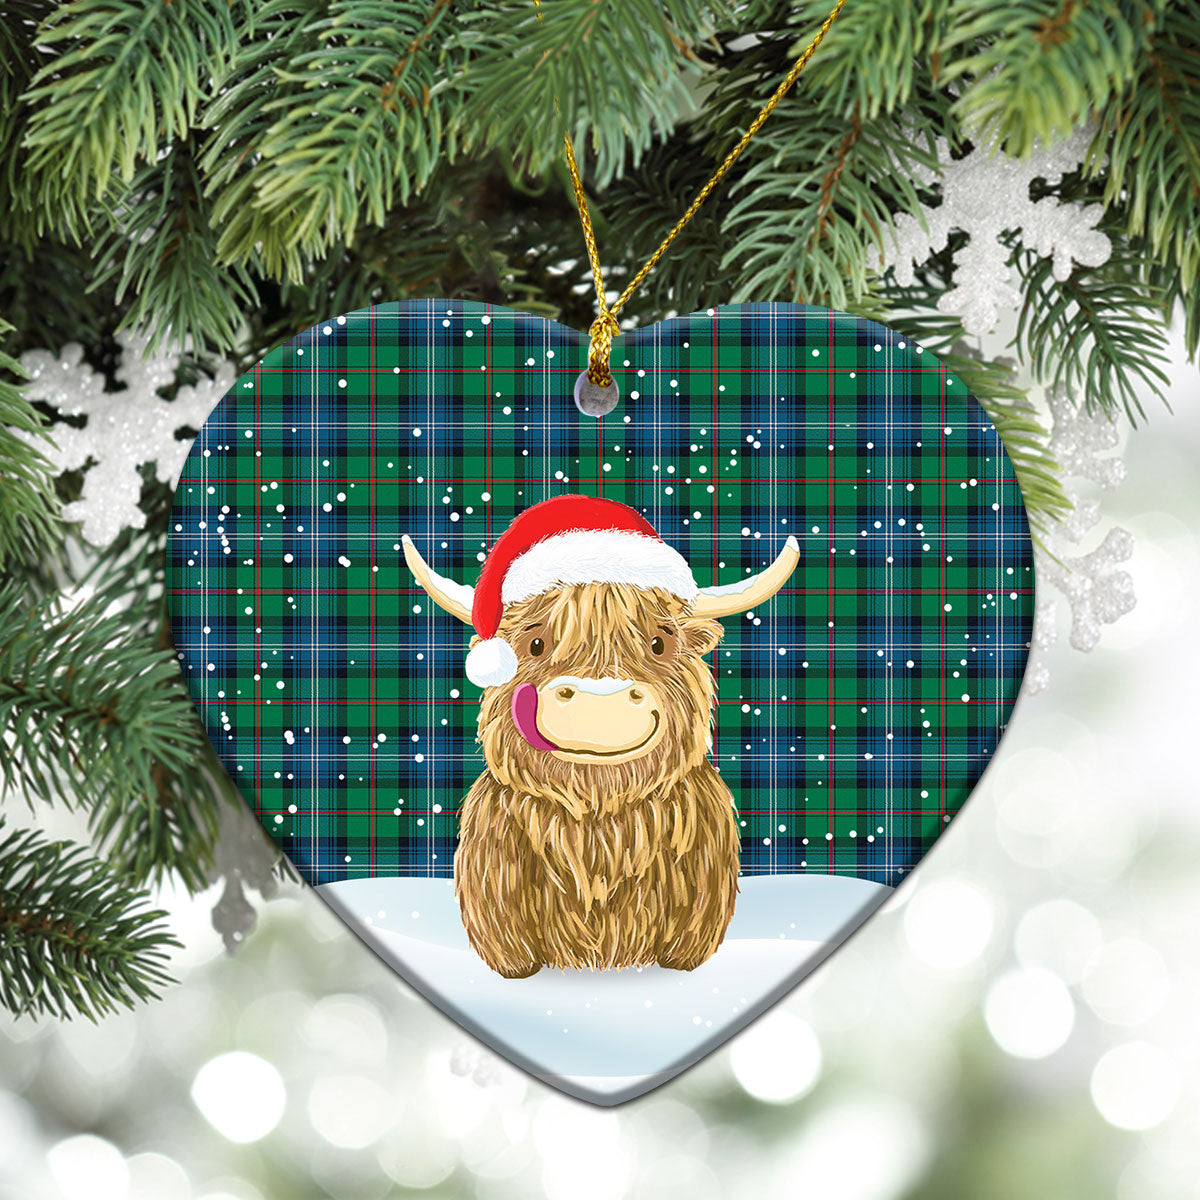 Urquhart Ancient Tartan Christmas Ceramic Ornament - Highland Cows Style